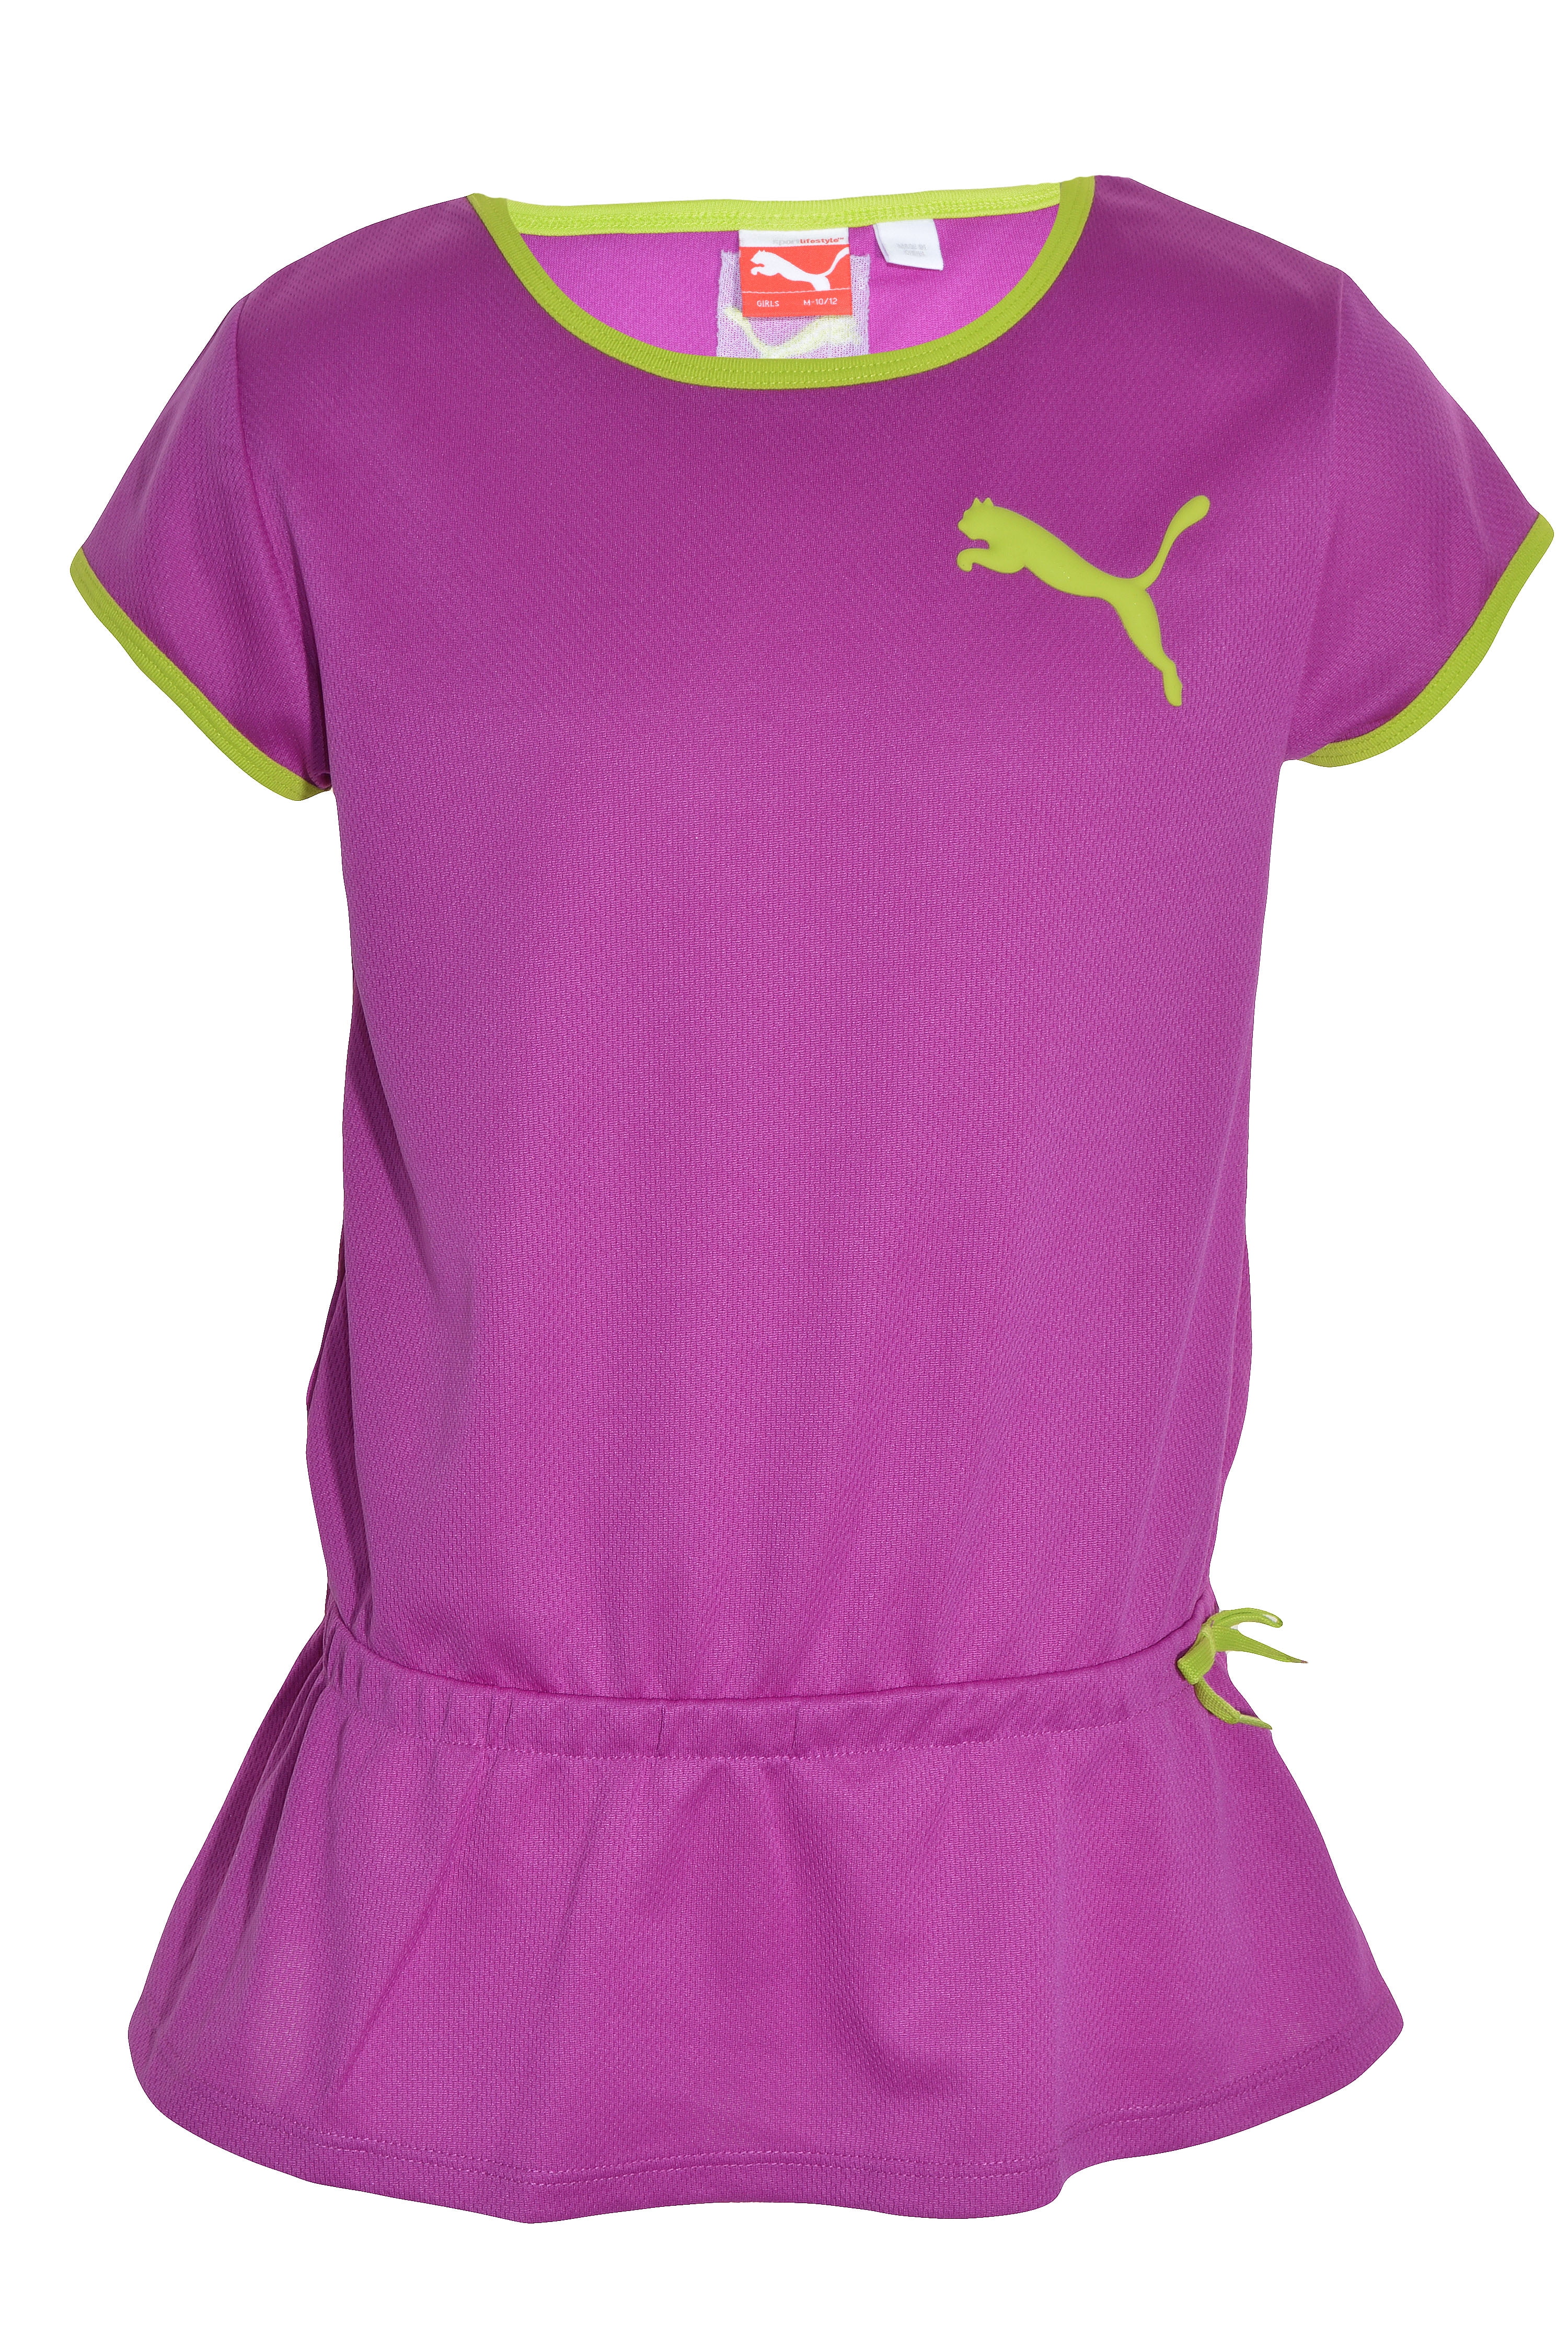 Peplum Puma (Purple, Big Athletic Girls 10/12) Shirt M